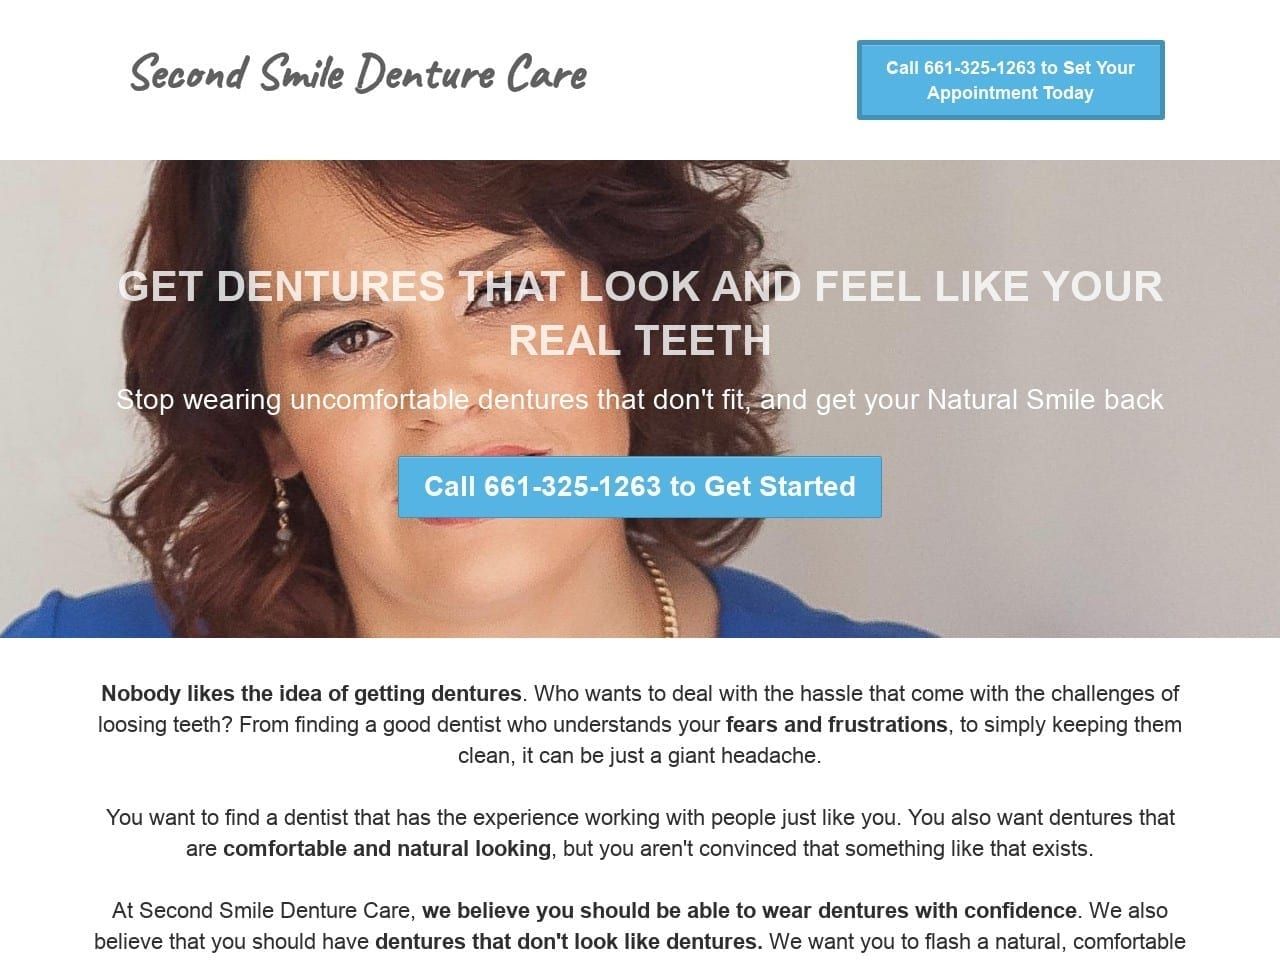 Second Smile Denture Care Website Screenshot from secondsmiledenturecare.com